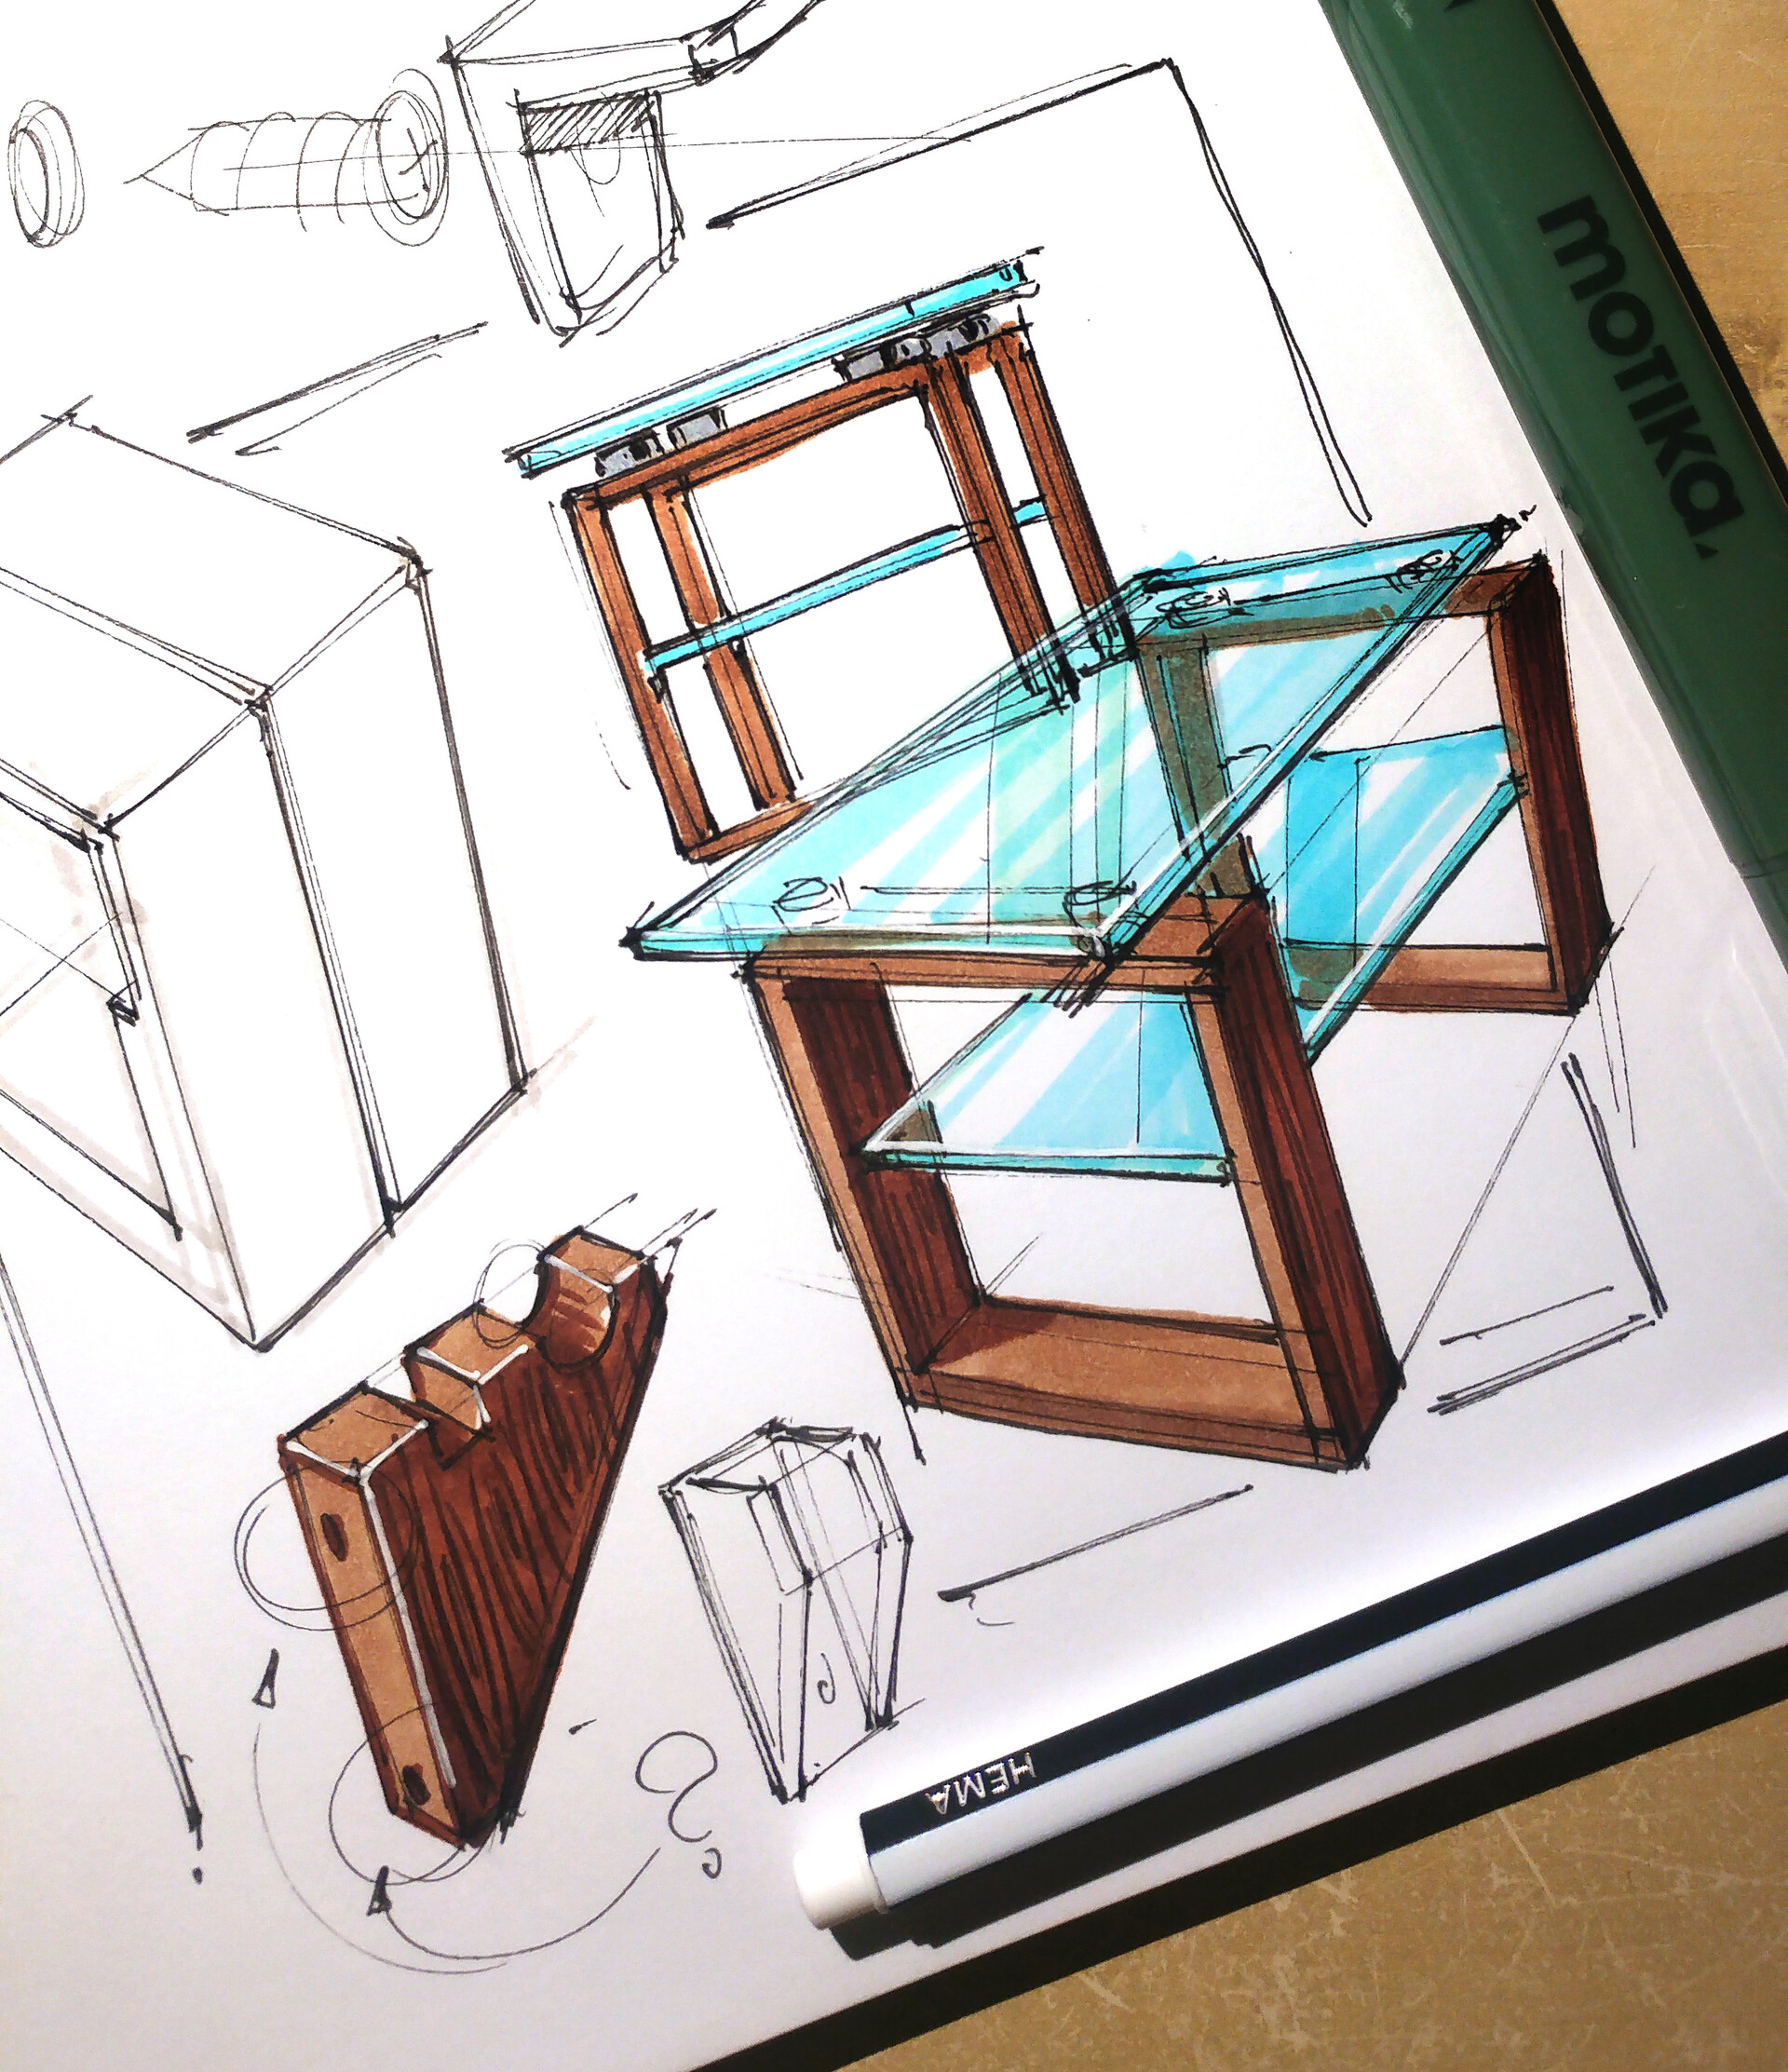 Designer sketching drawing design development product plan draft chair  armchair Wingback Interior furniture prototype manufacturing production.  designer studio concept . Stock Photo | Adobe Stock